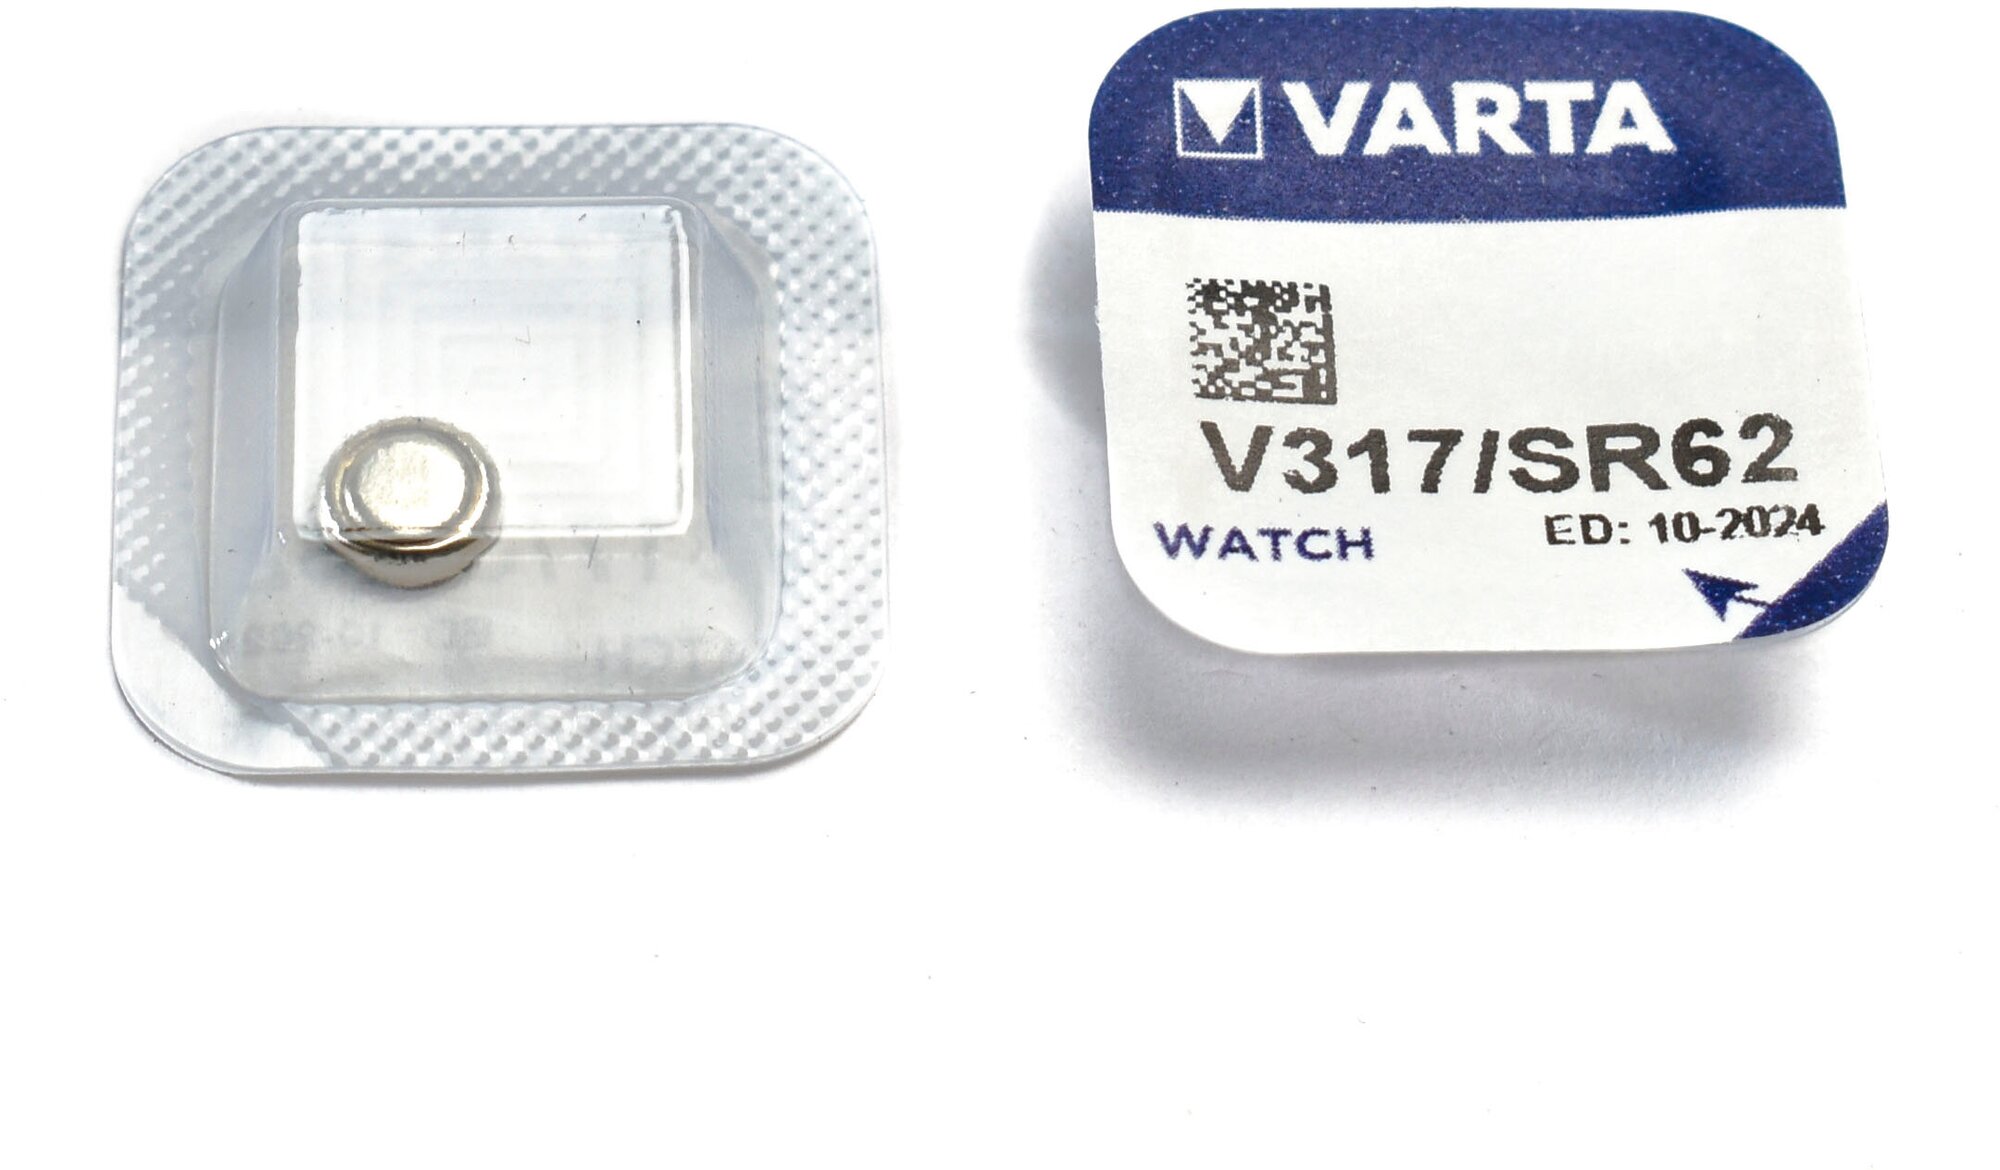 Батарейка для часов VARTA V 317 / SR62